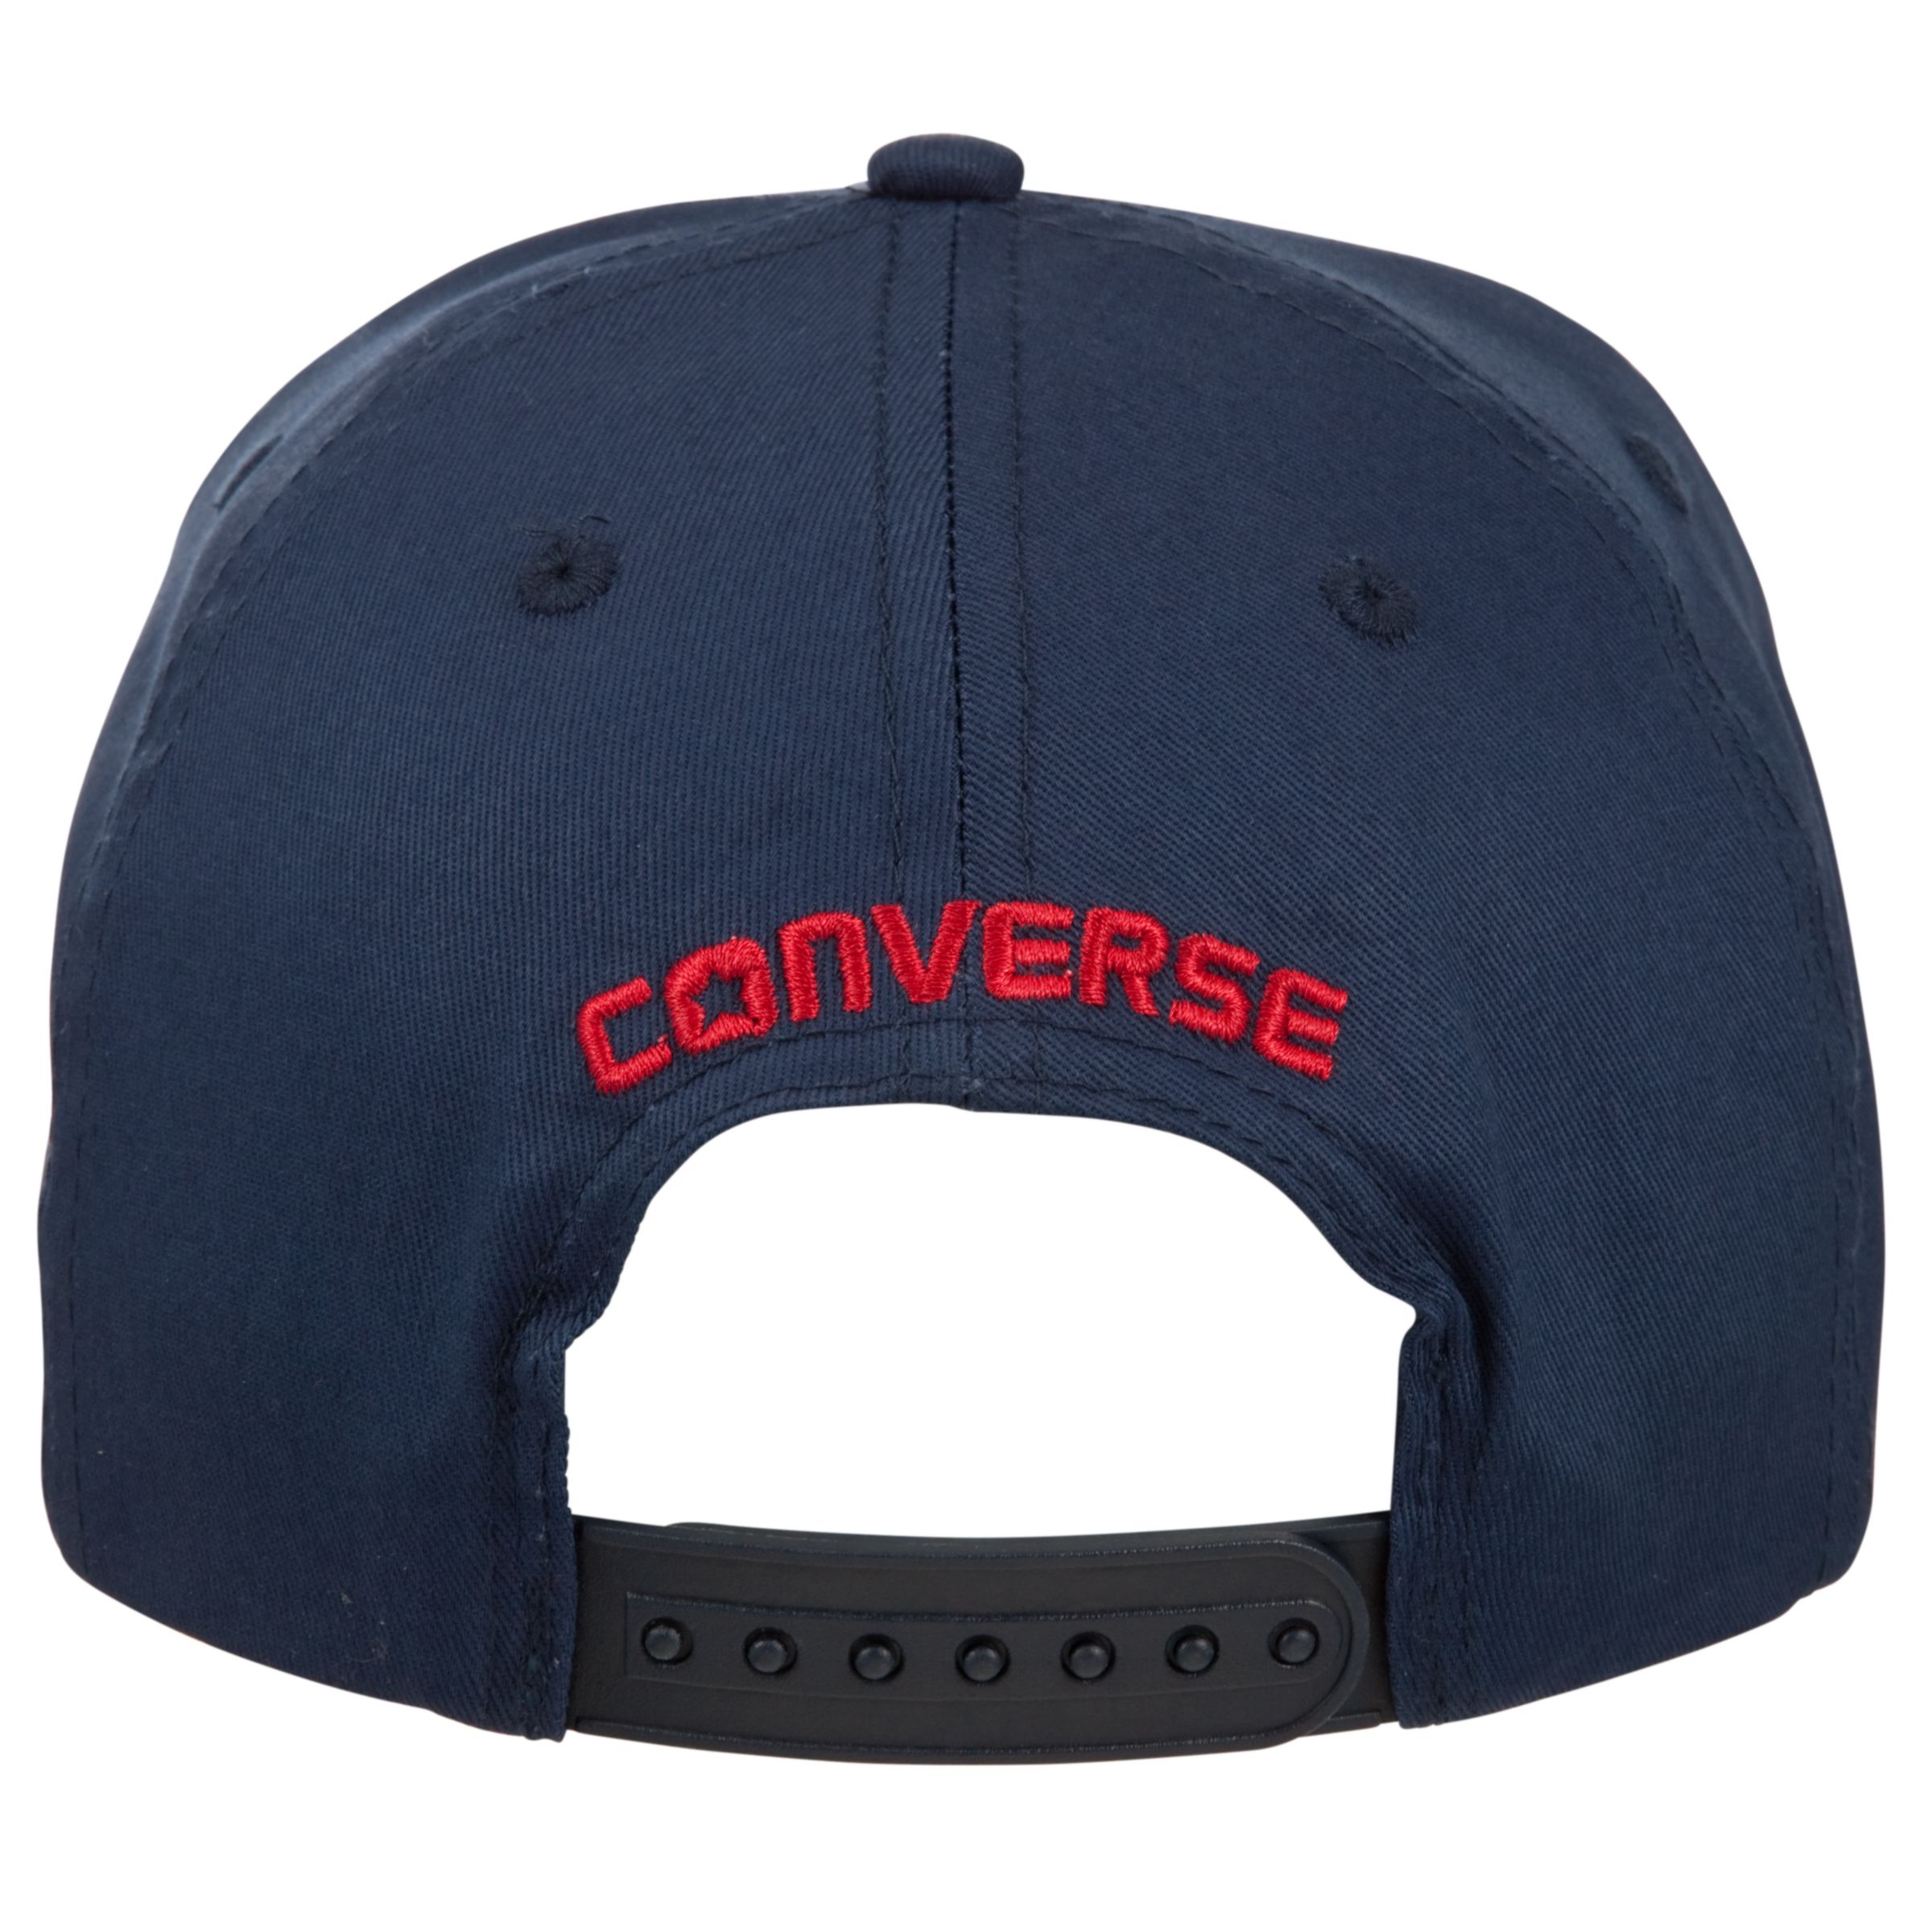 converse navy cap